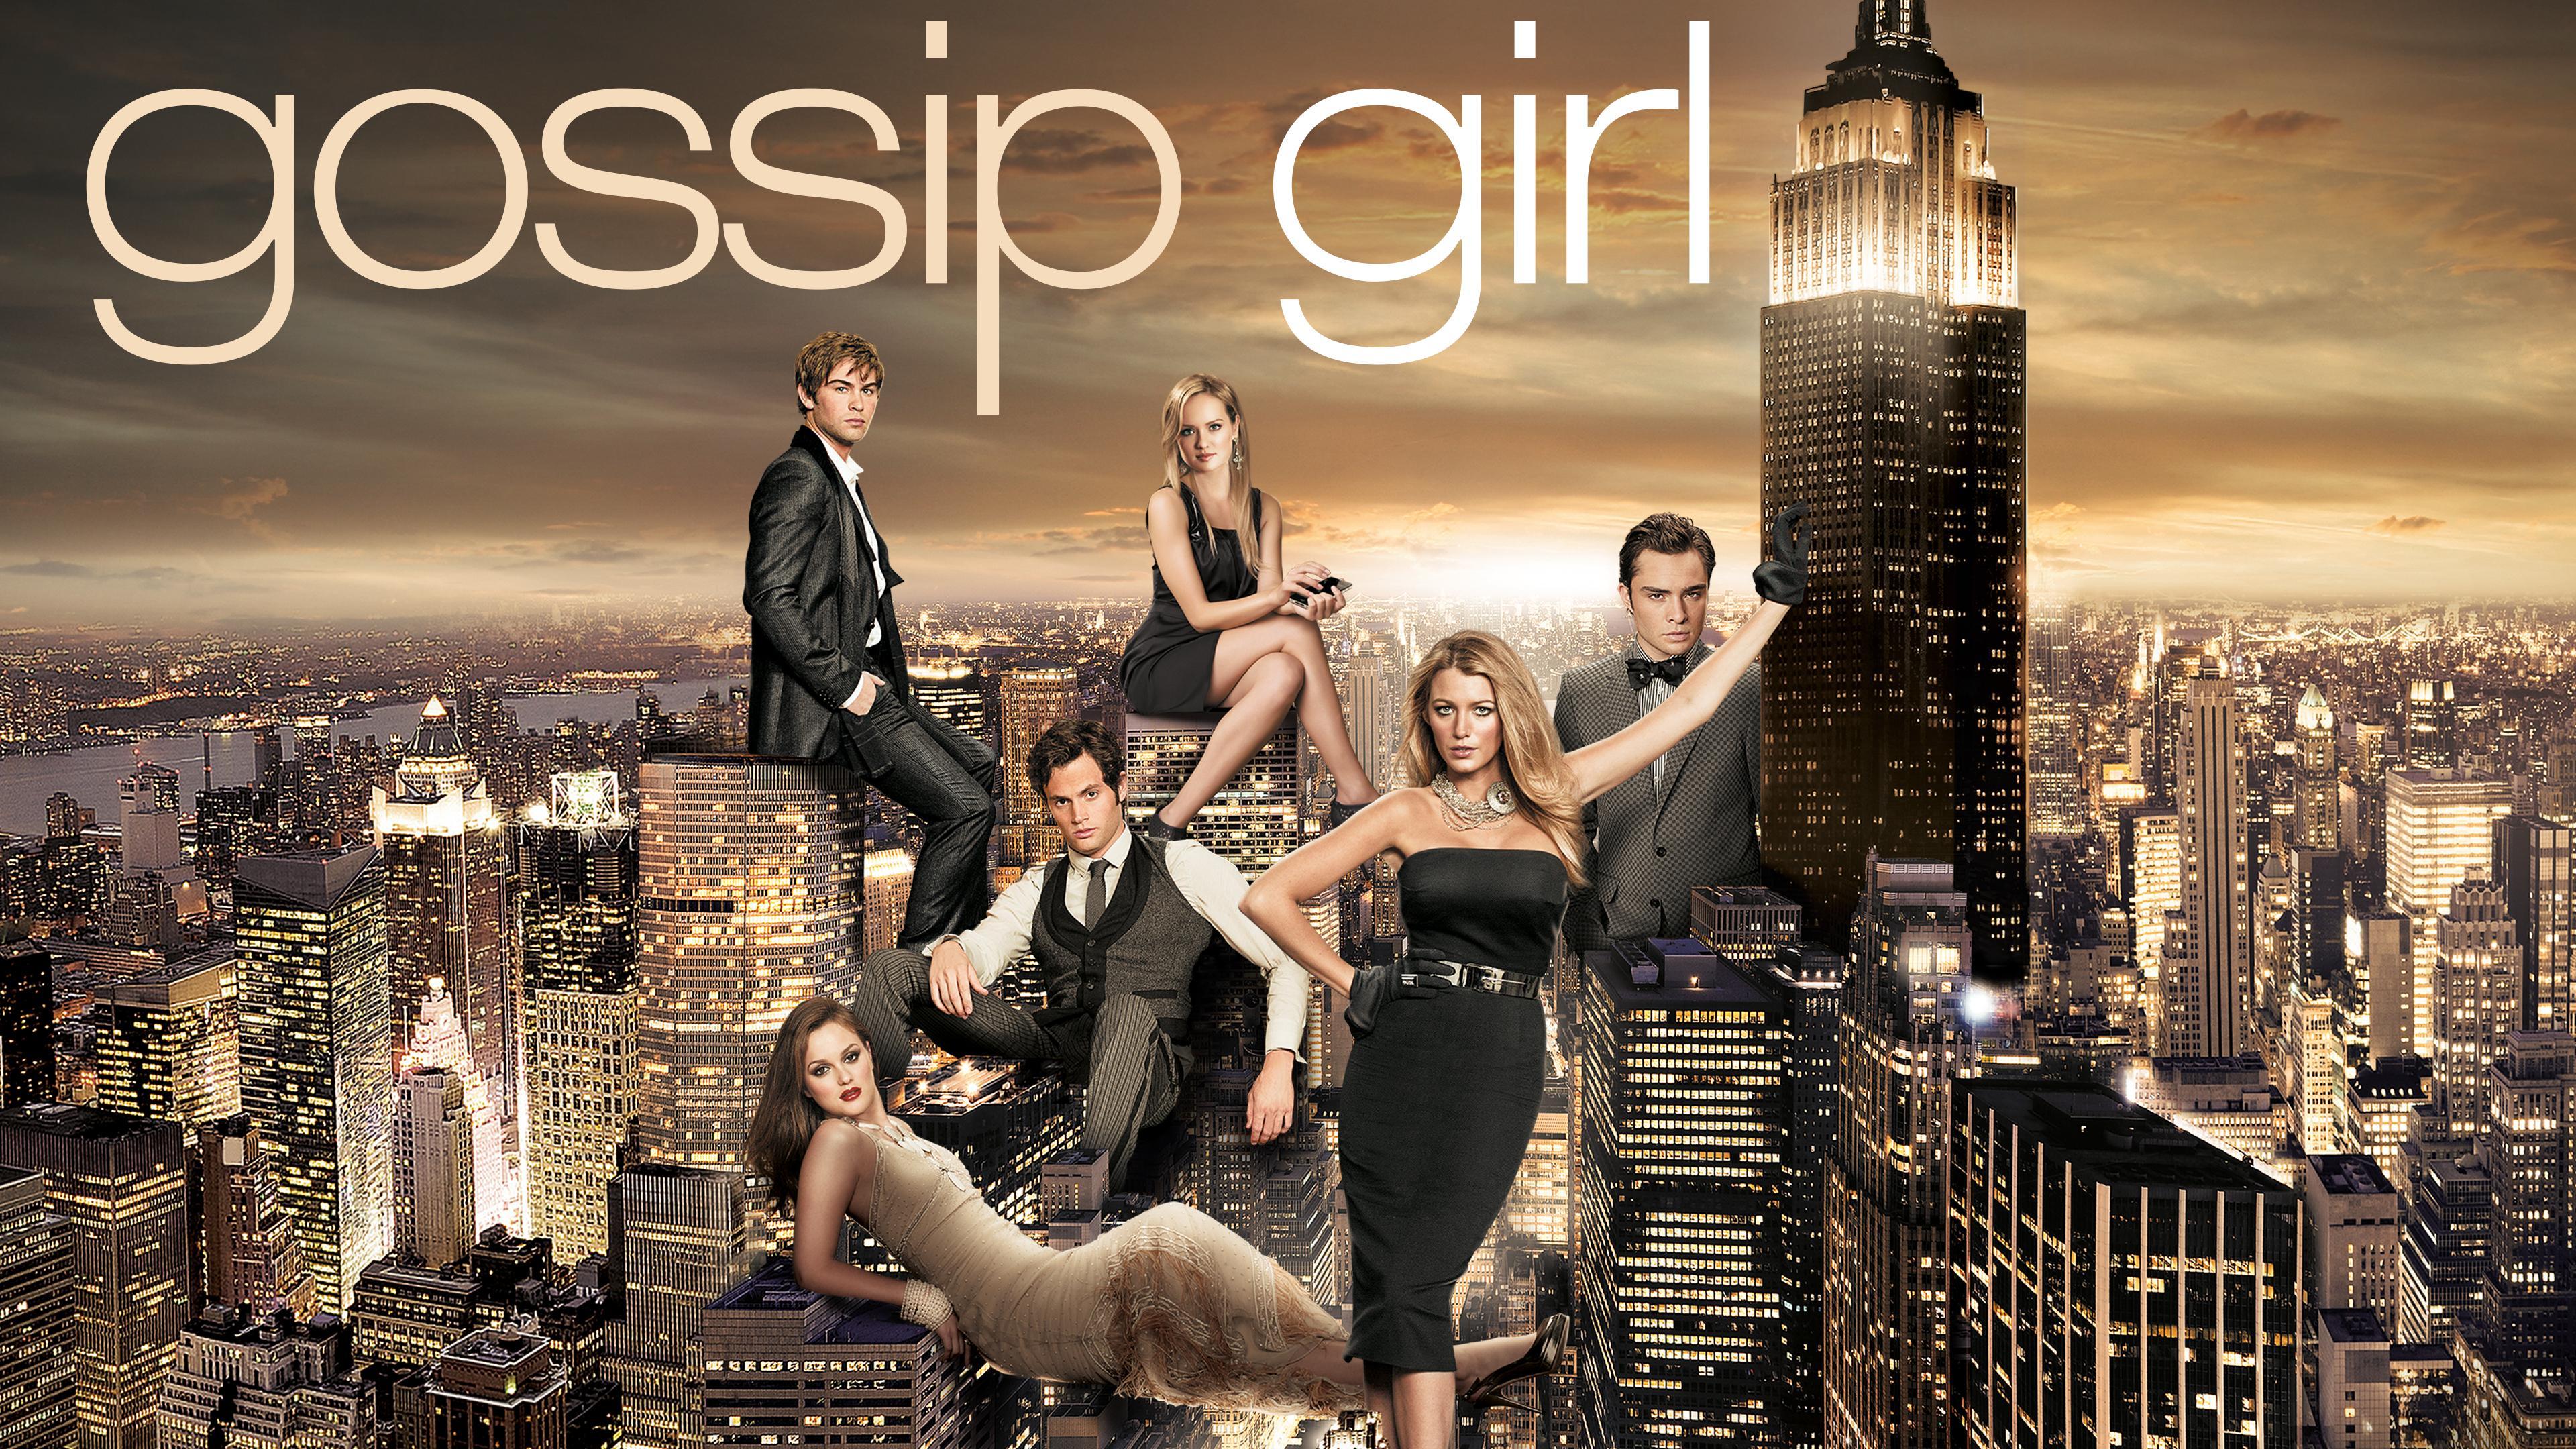 Gossip Girl Complete Seasons 1-6 Bundle: : Movies & TV Shows